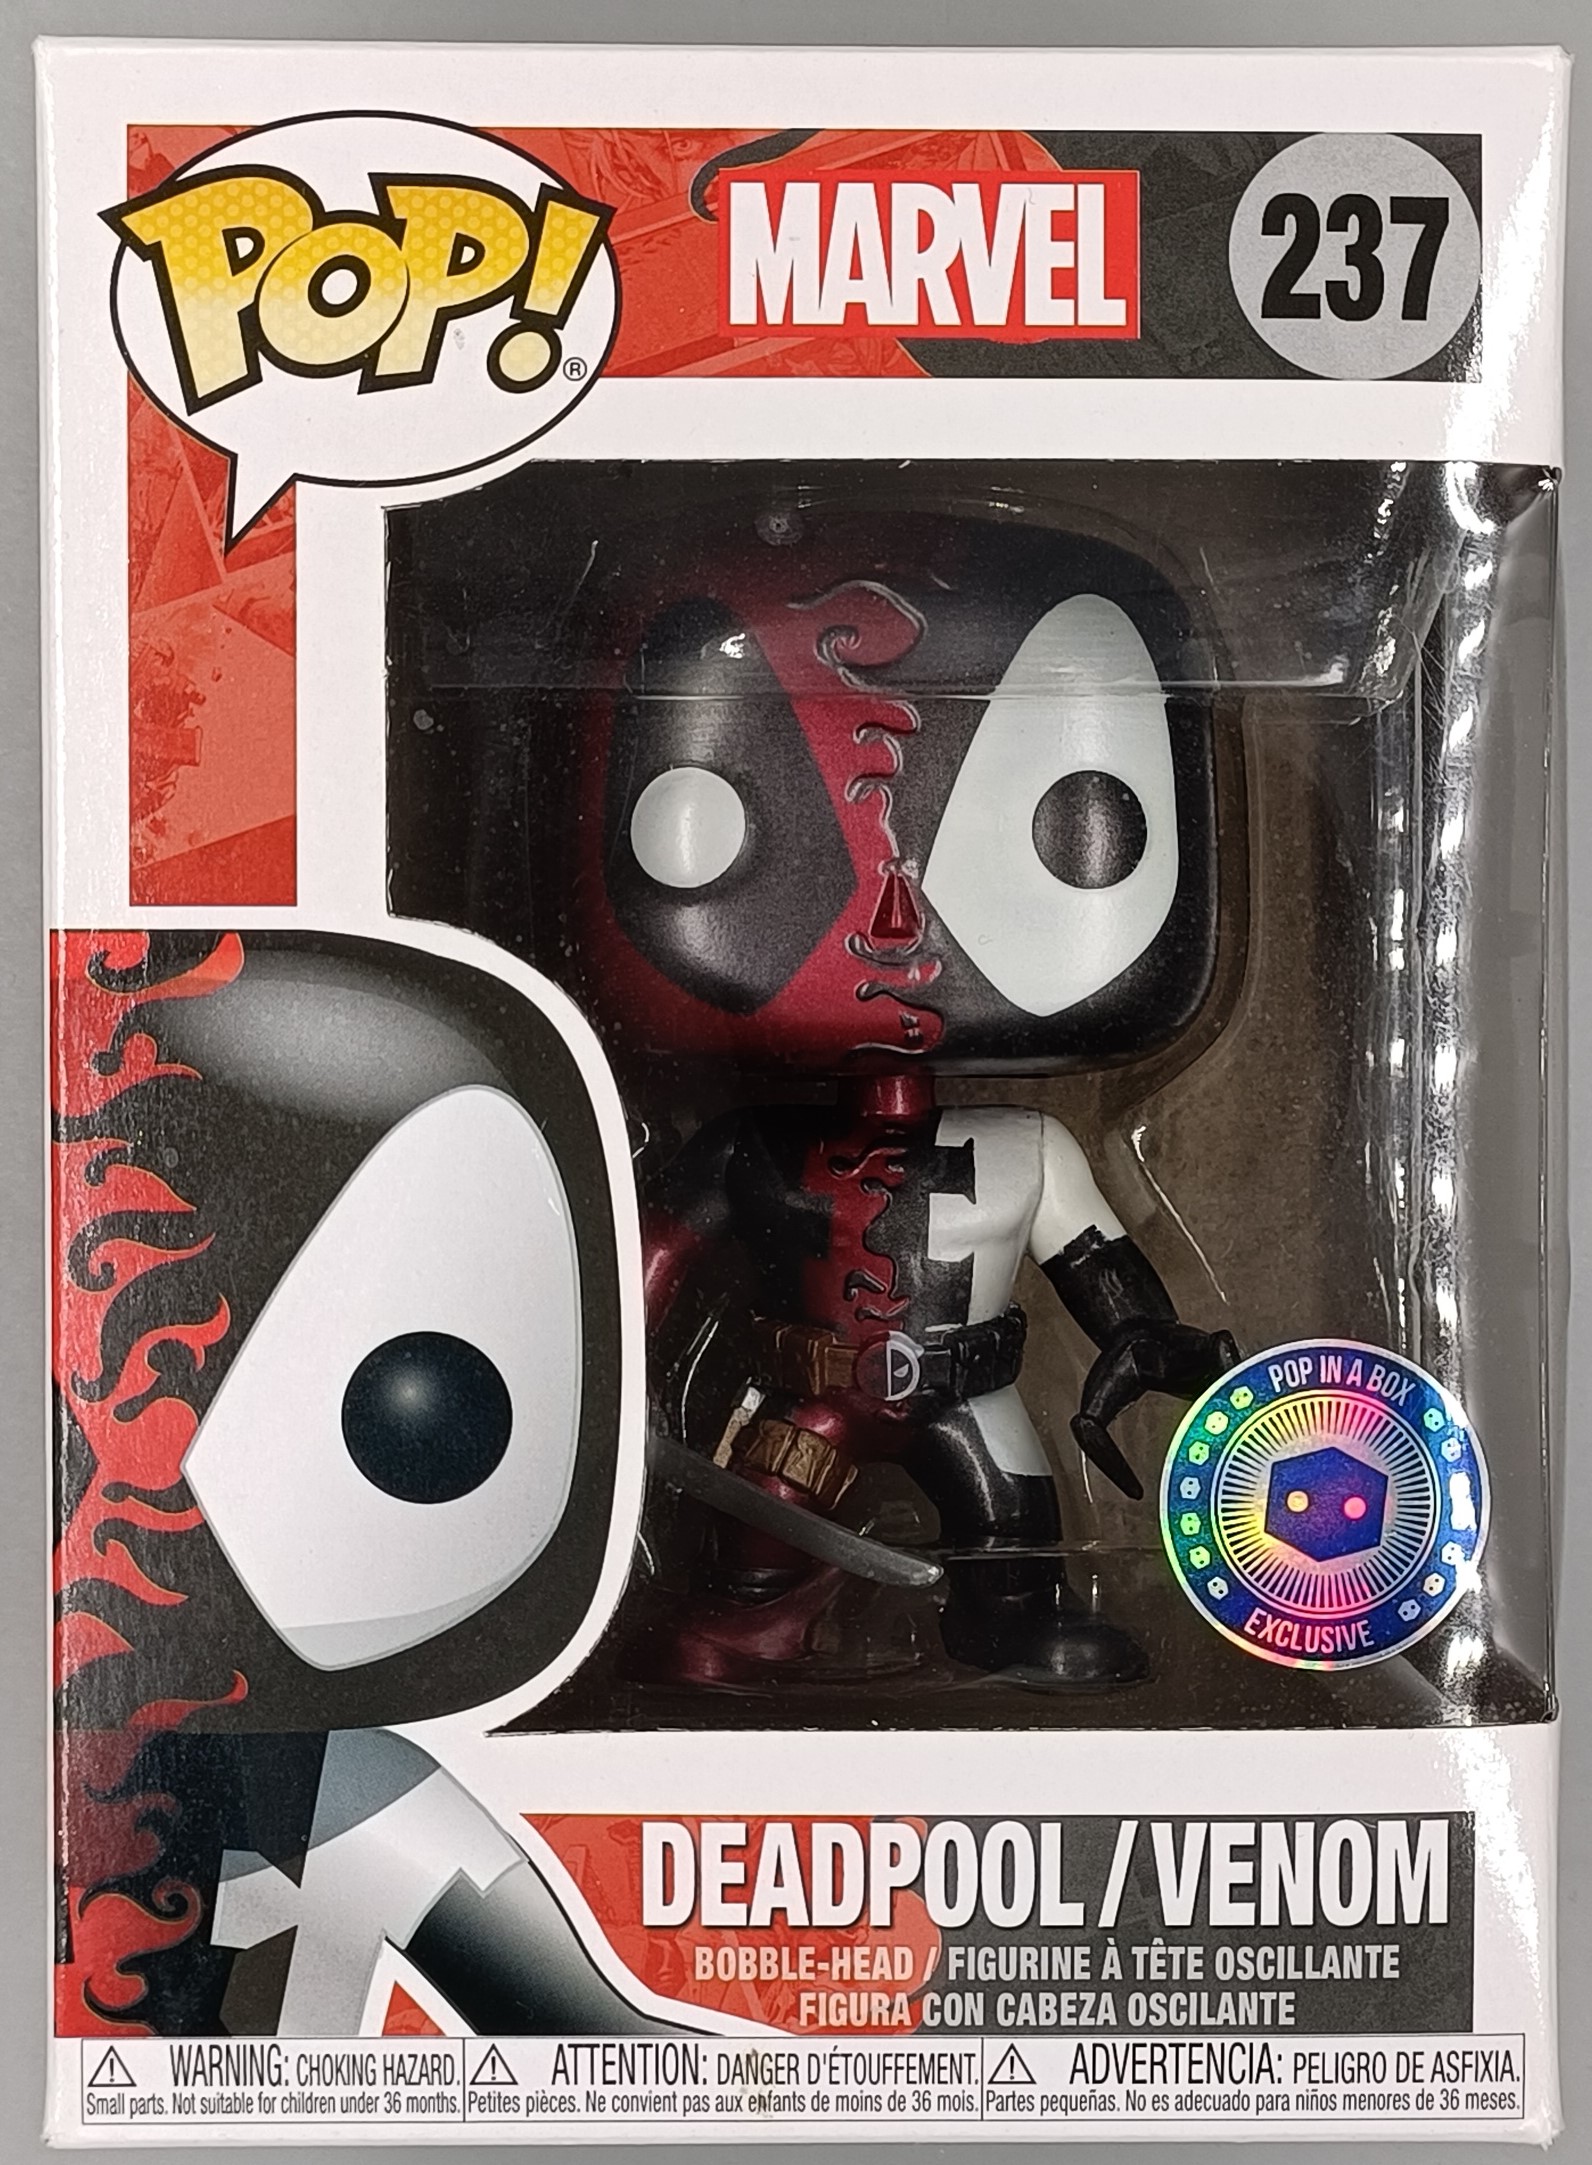 Funko POP! Marvel Deadpool Venom #237 Action Figure - Exclusive